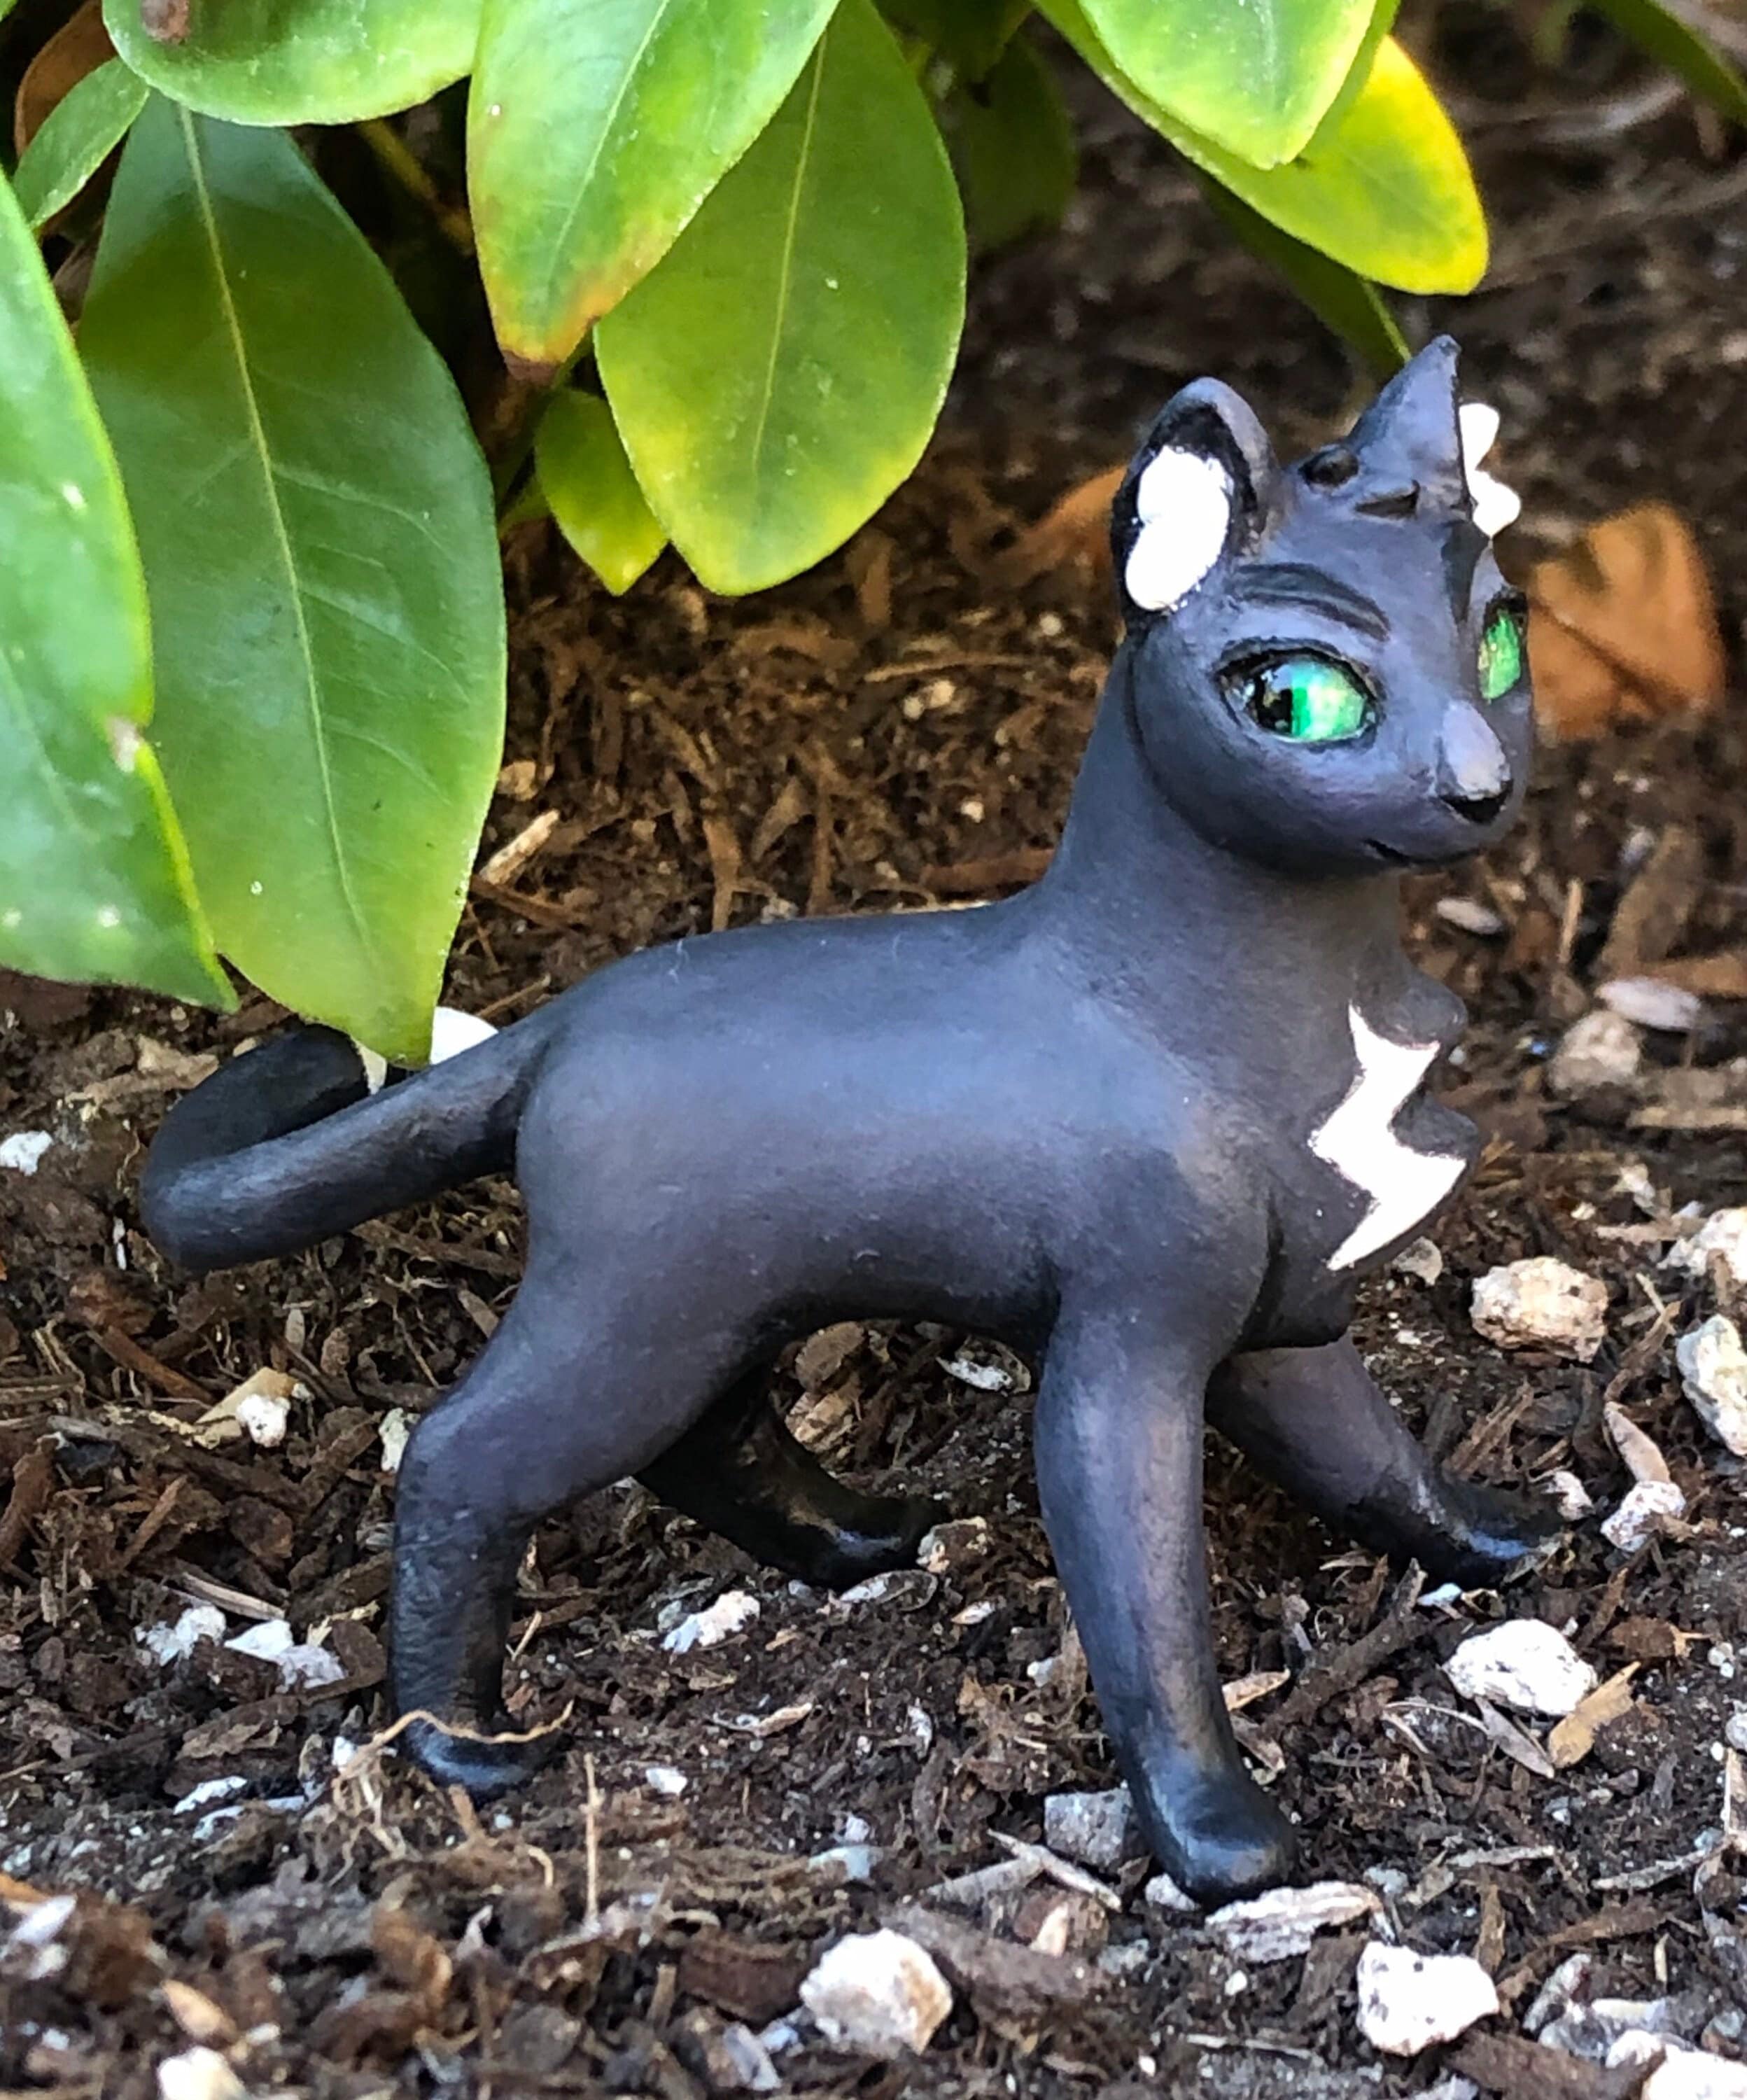 Art Clay Cat Sculptures Ceramics For Kids